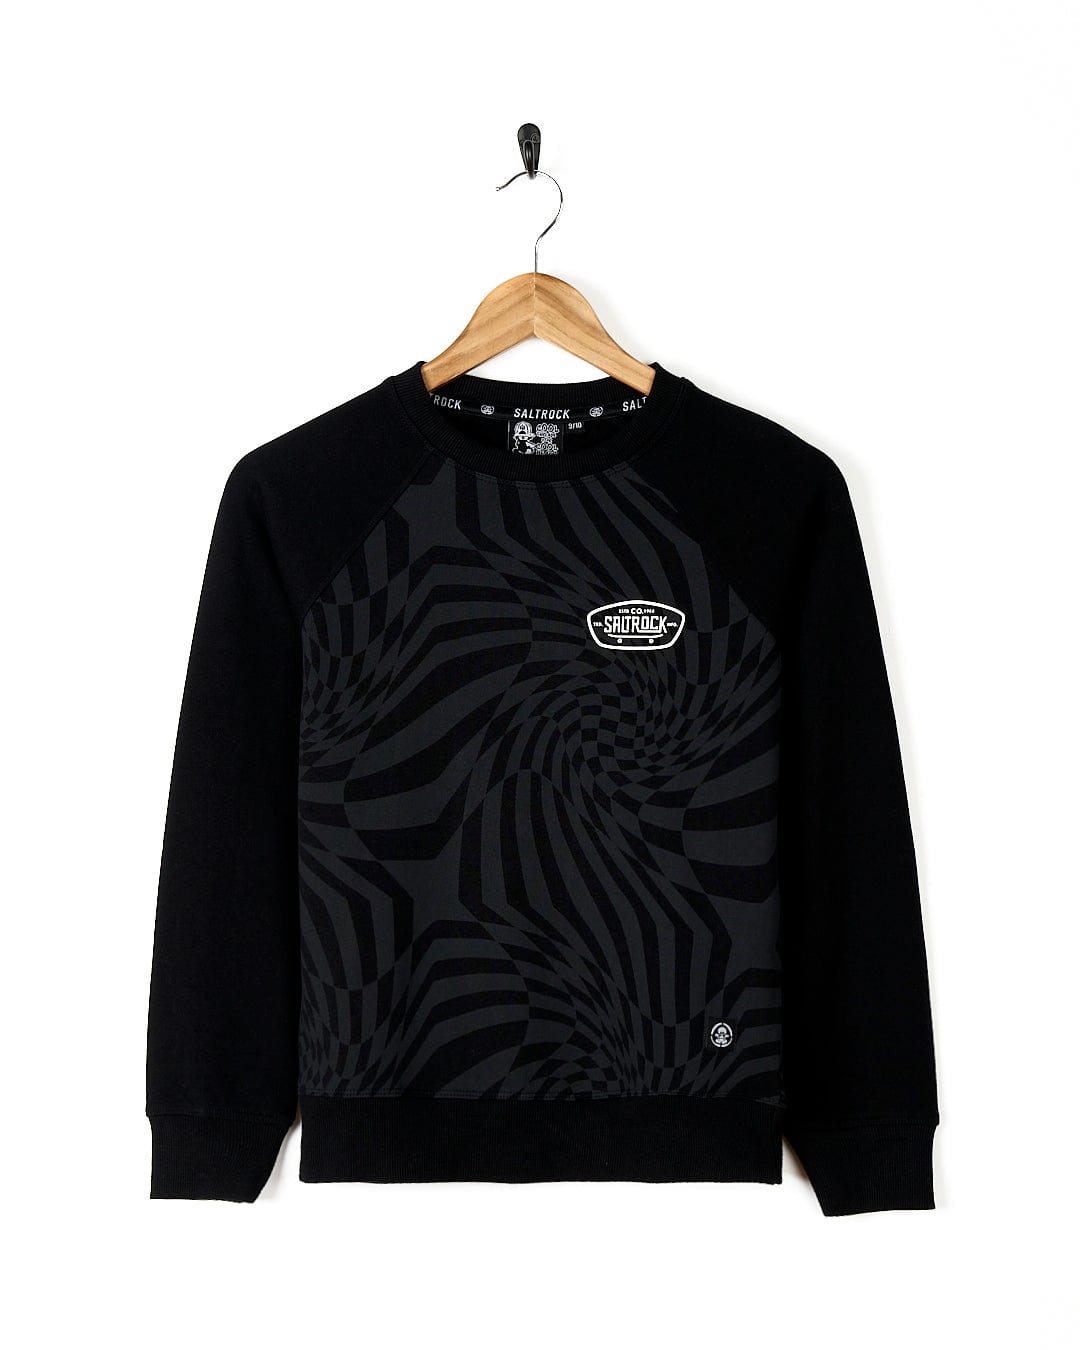 A Grip It - Kids Crew Neck Sweat - Black sweatshirt with a geometric zebra print by Saltrock.